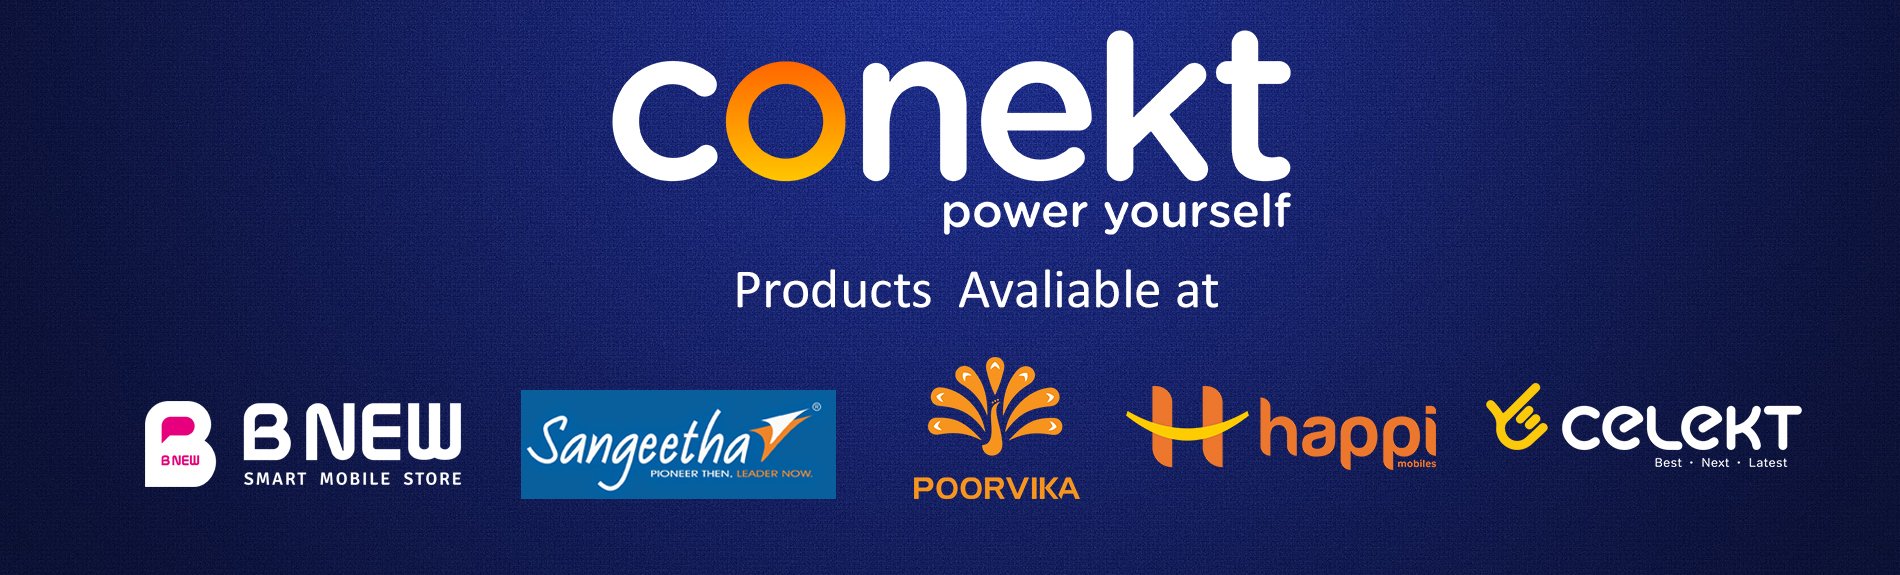 Conekt Premium mobile accessories availability stores outlets